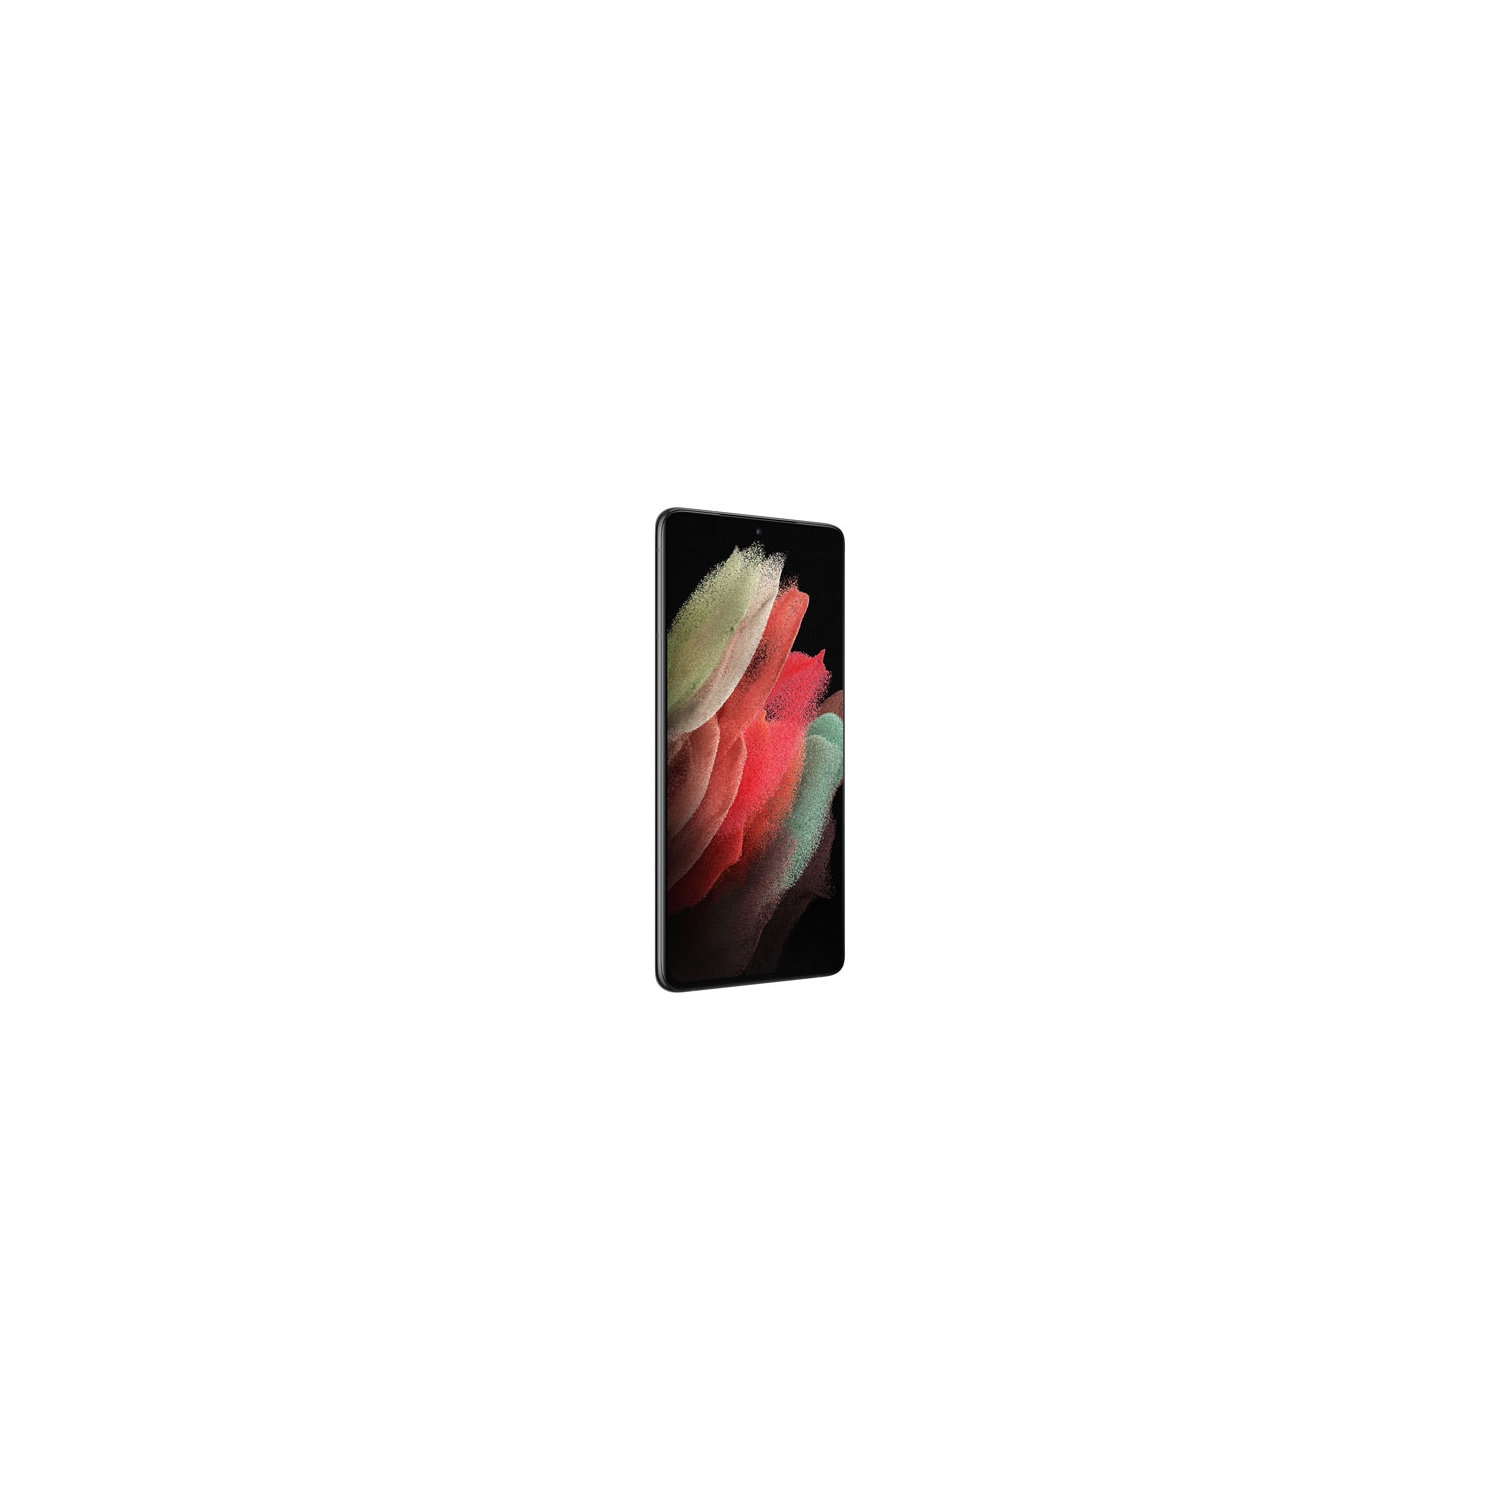 Samsung Galaxy S21 Ultra 5G 256GB Smartphone - Phantom Black - Unlocked - Open Box